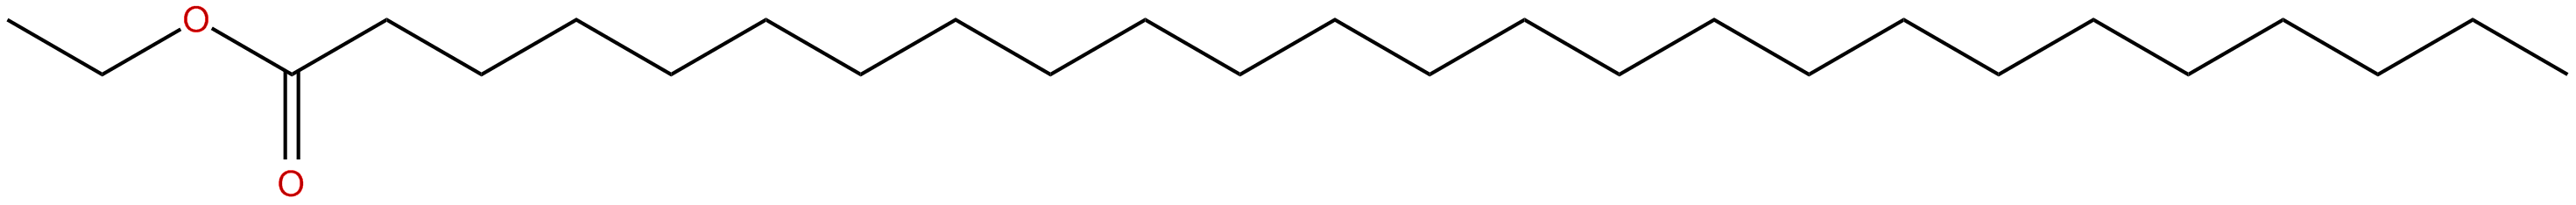 Image of ethyl pentacosanoate